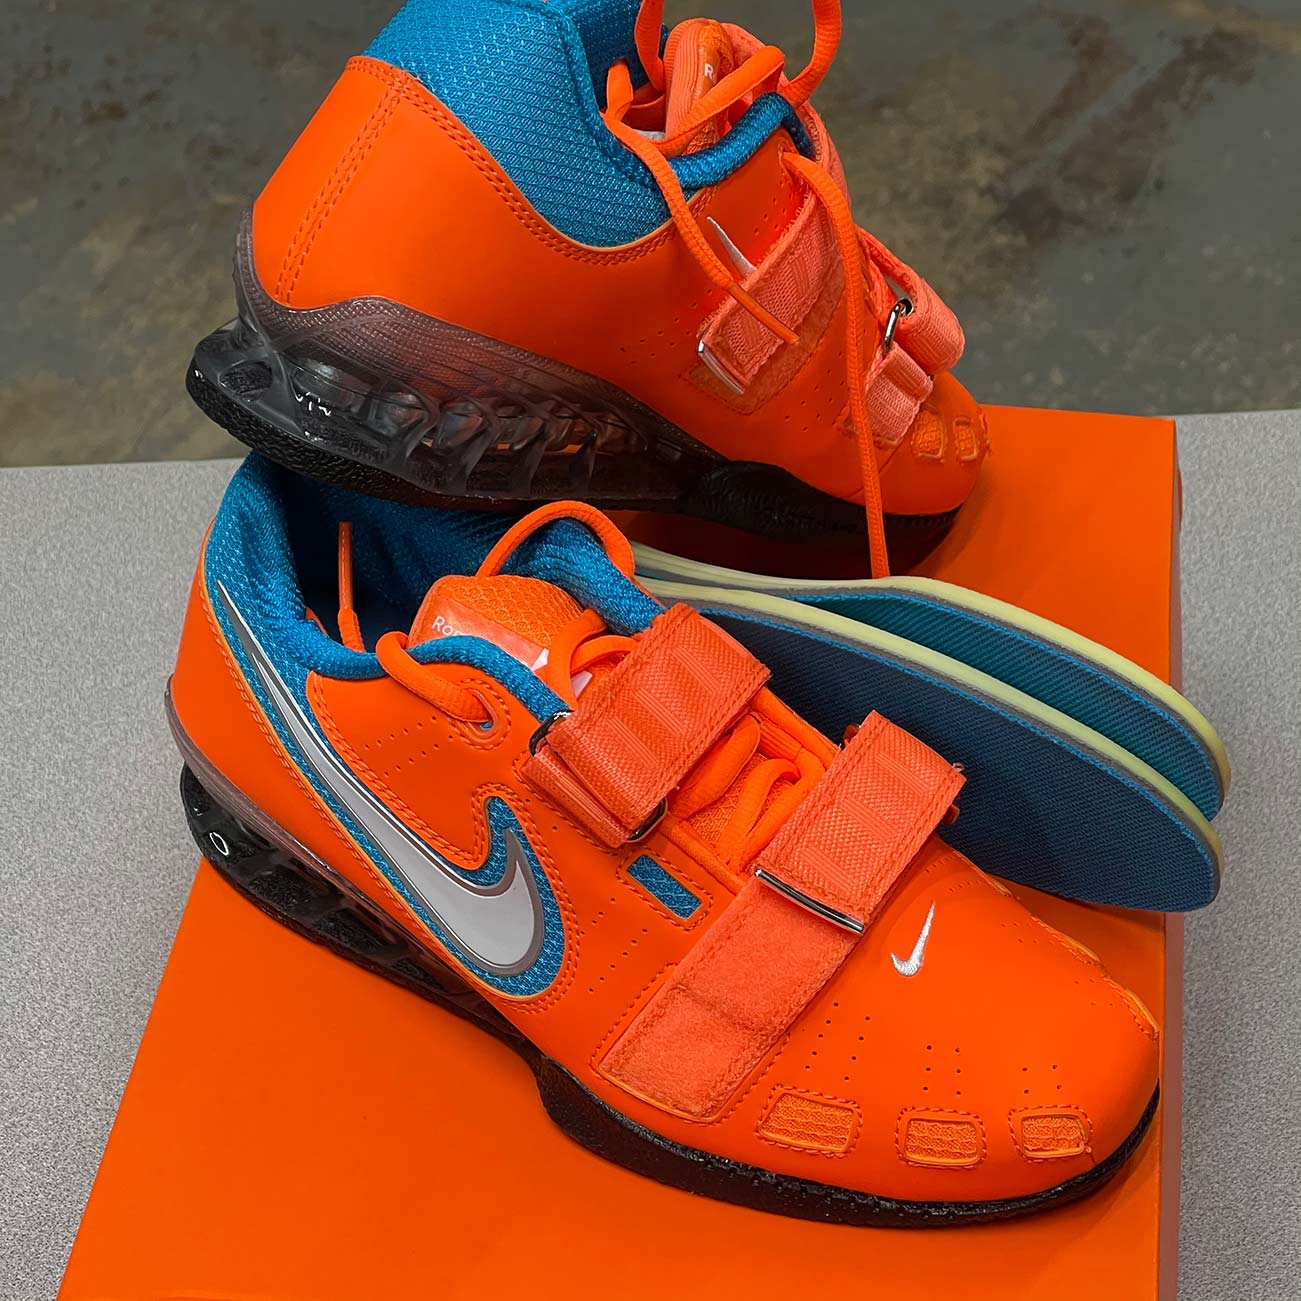 teal and orange sneakers